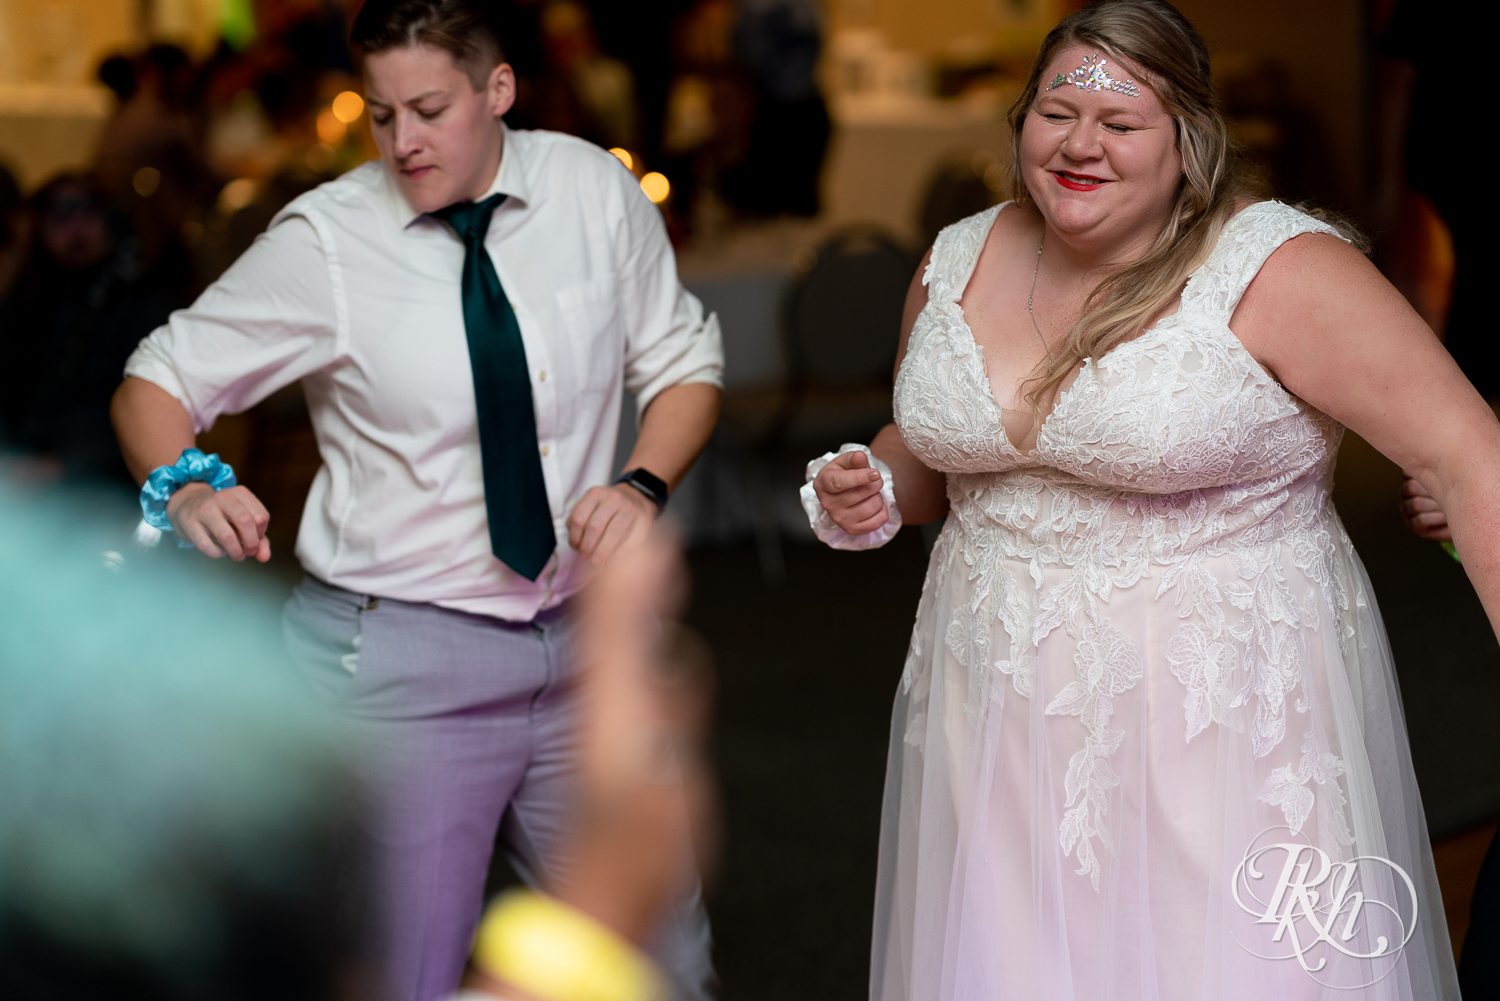 Guests dance at wedding reception at Eagan Community Center in Eagan, Minnesota.